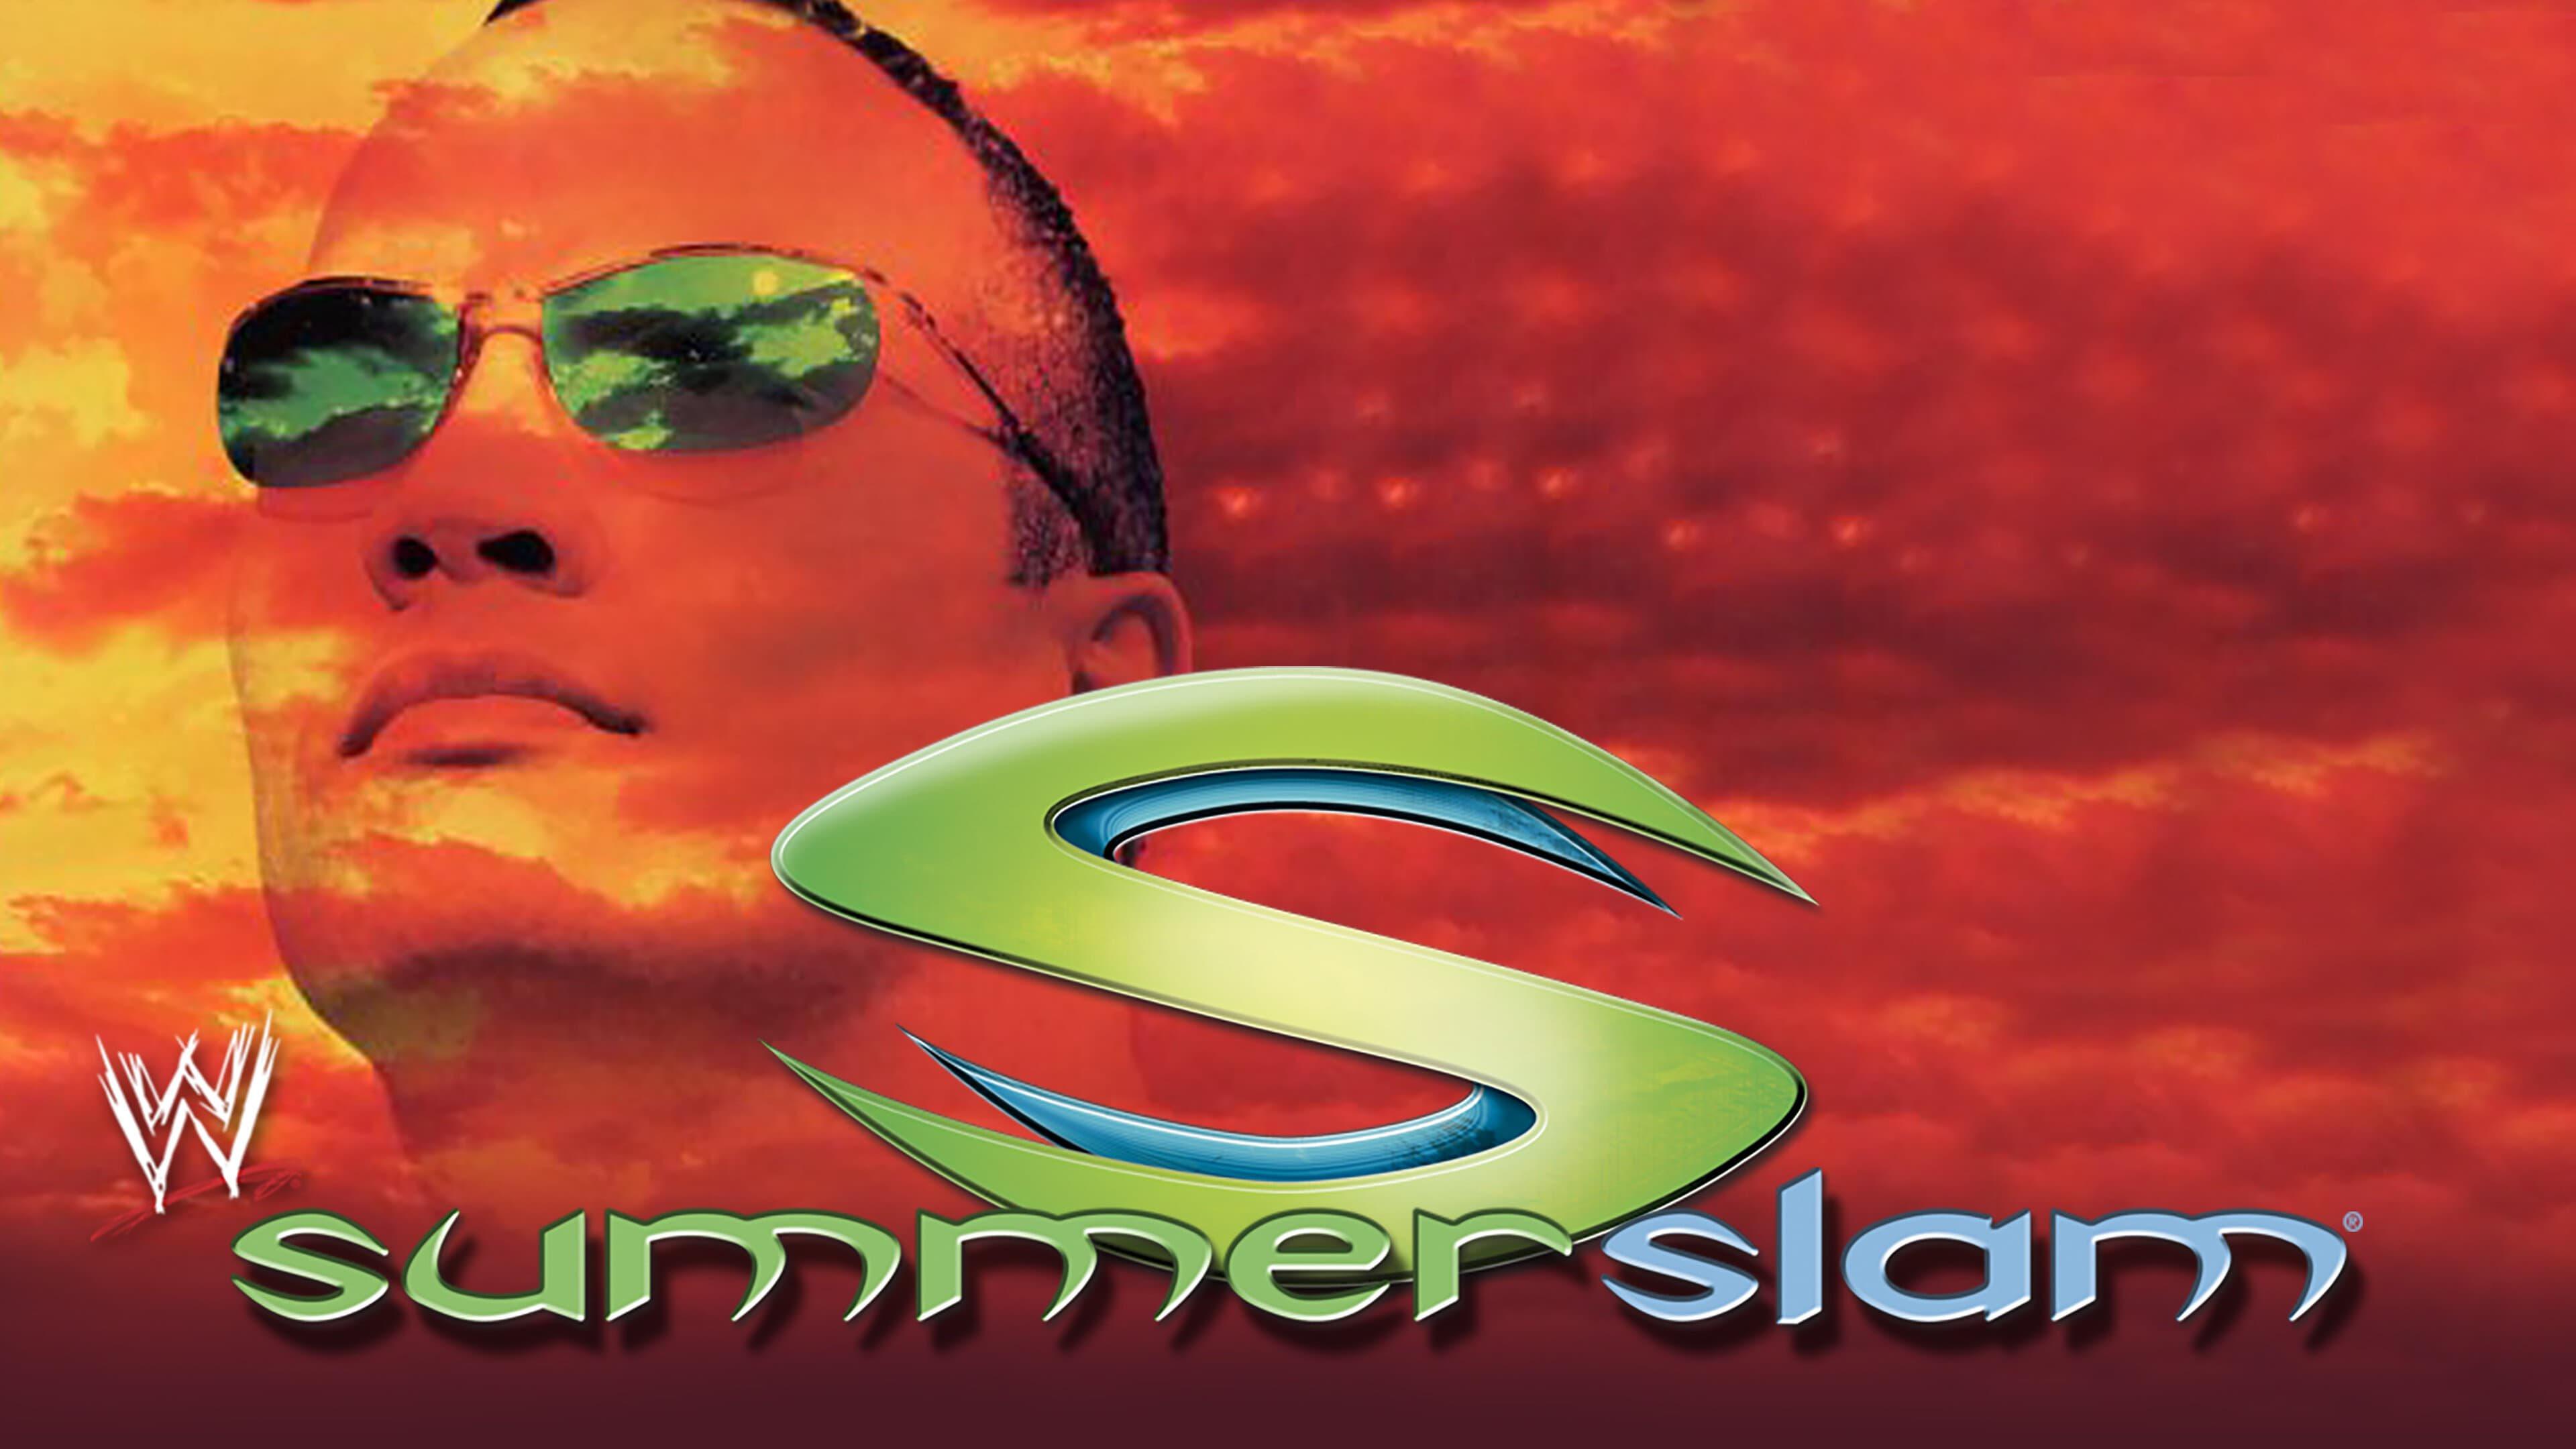 WWE SummerSlam 2002 backdrop